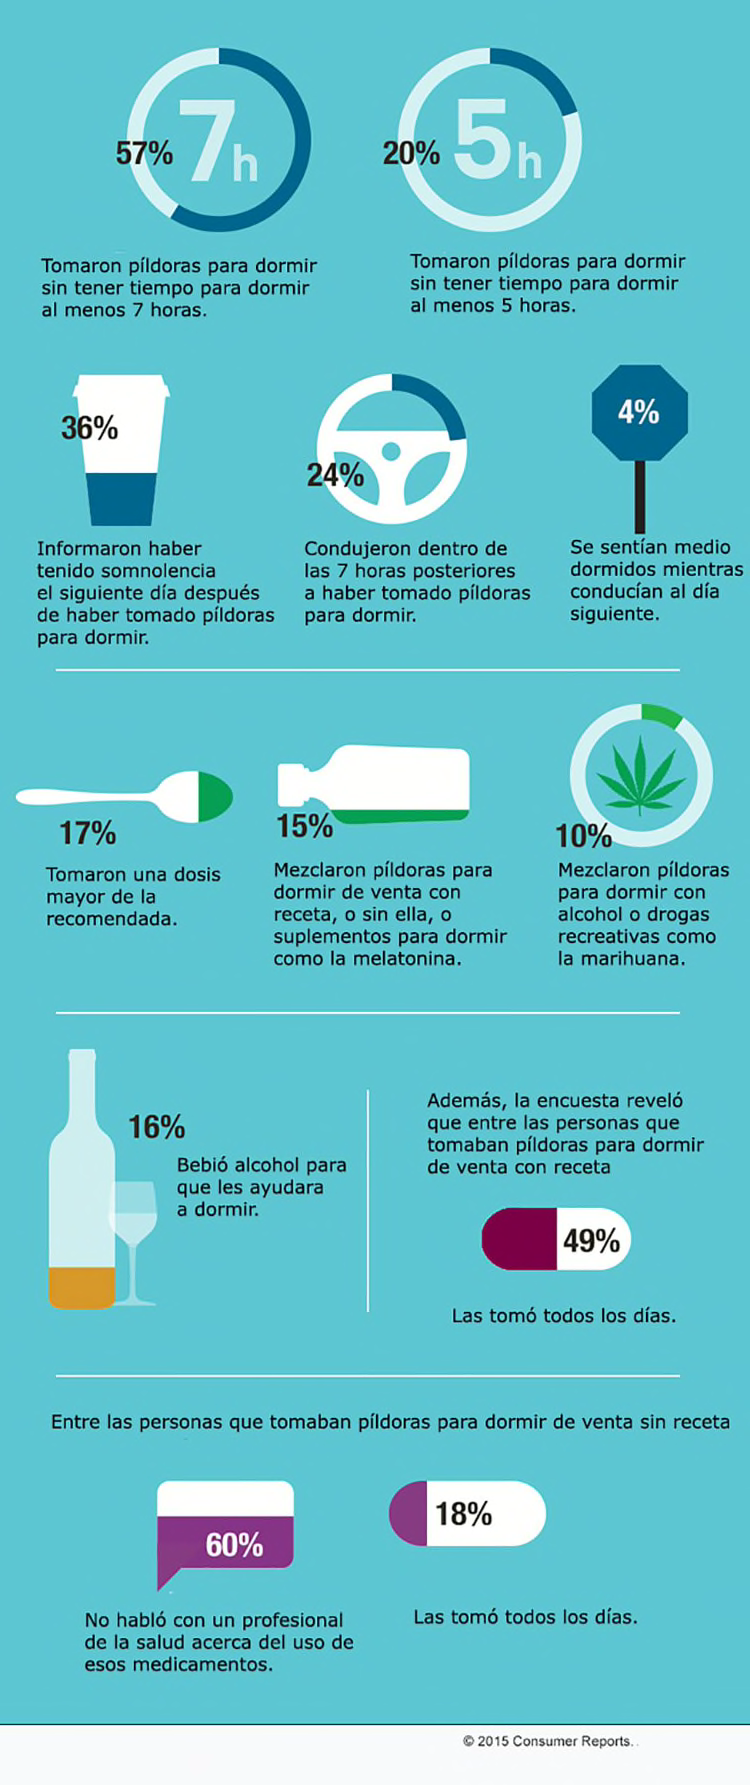 Risk of sleeping drugs Spanish